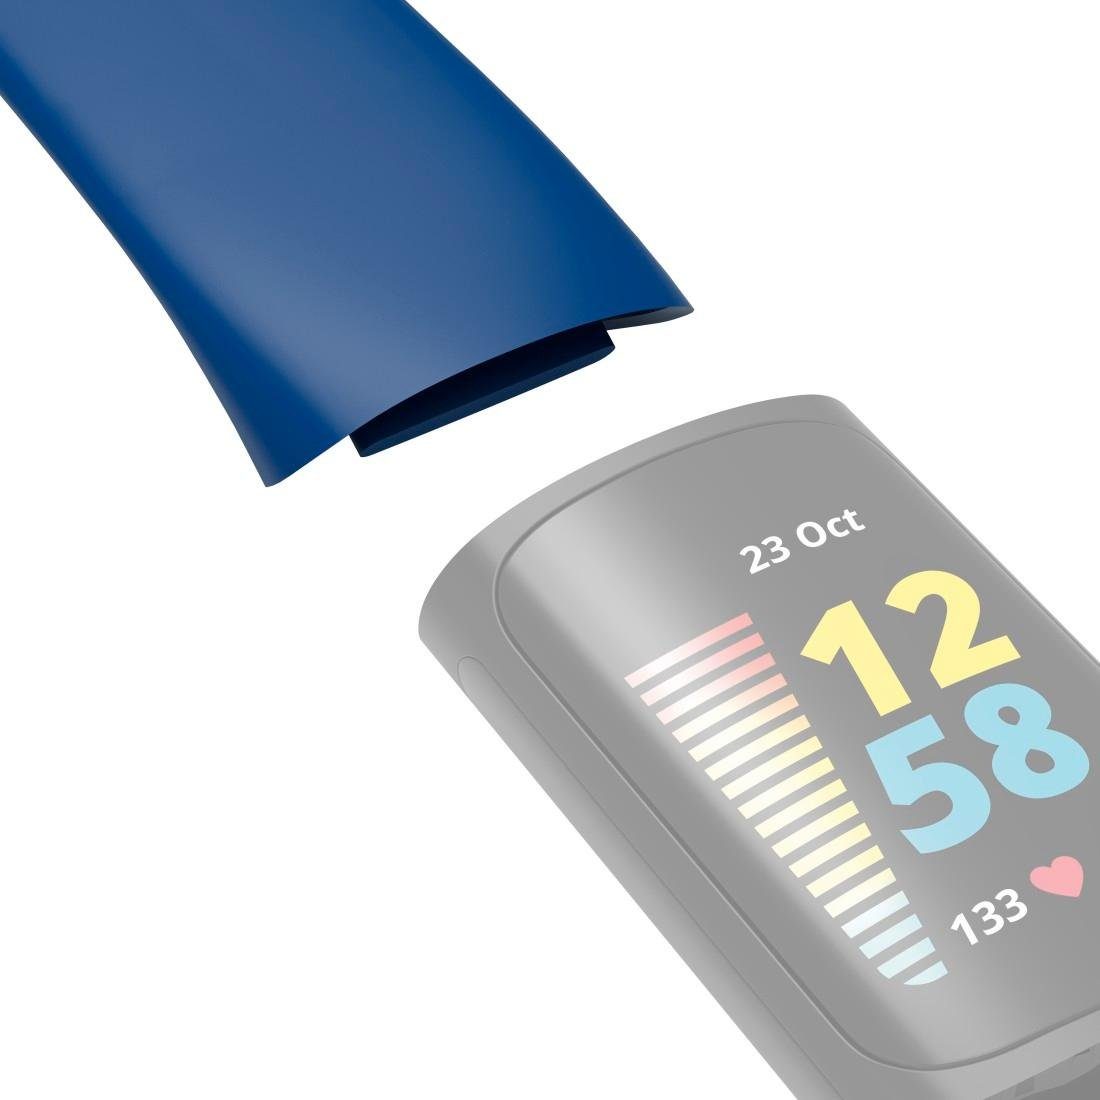 für 5, Armband Fitbit dunkelblau universal Uhrenarmband Hama Smartwatch-Armband zum Tauschen, Charge